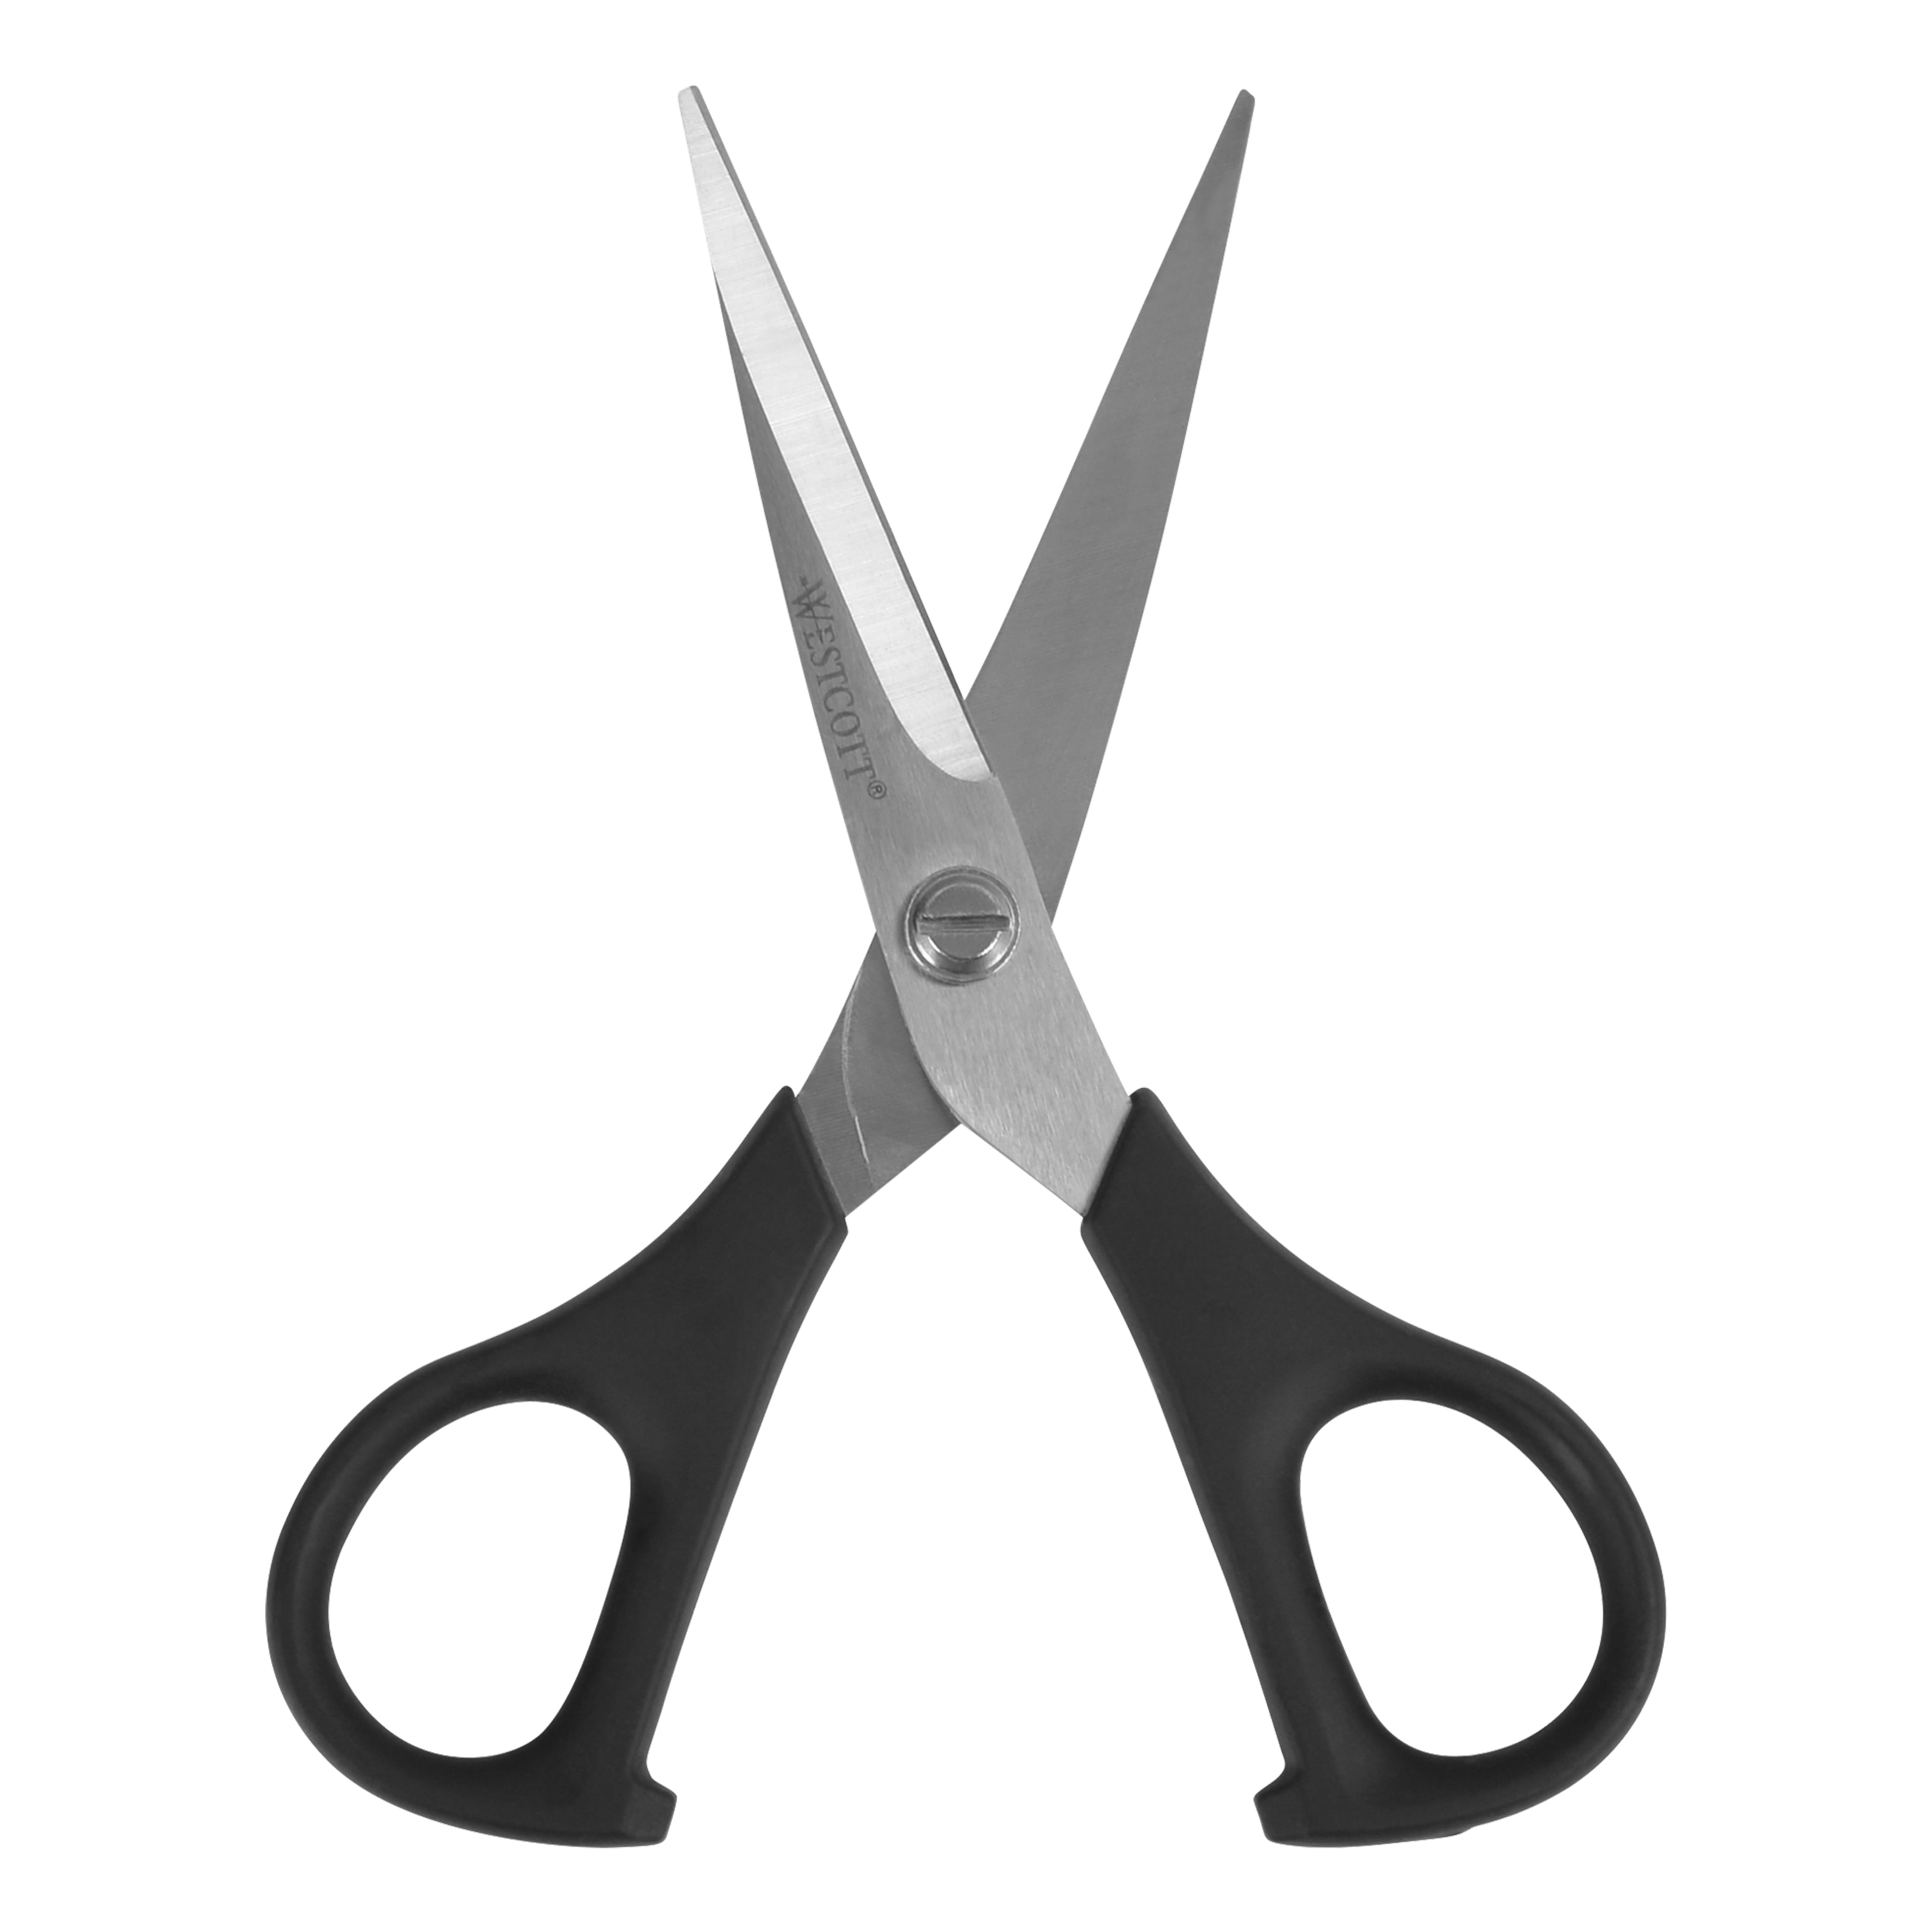 Westcott 13402 Scissors, All-Purpose Bent Scissors for Office and